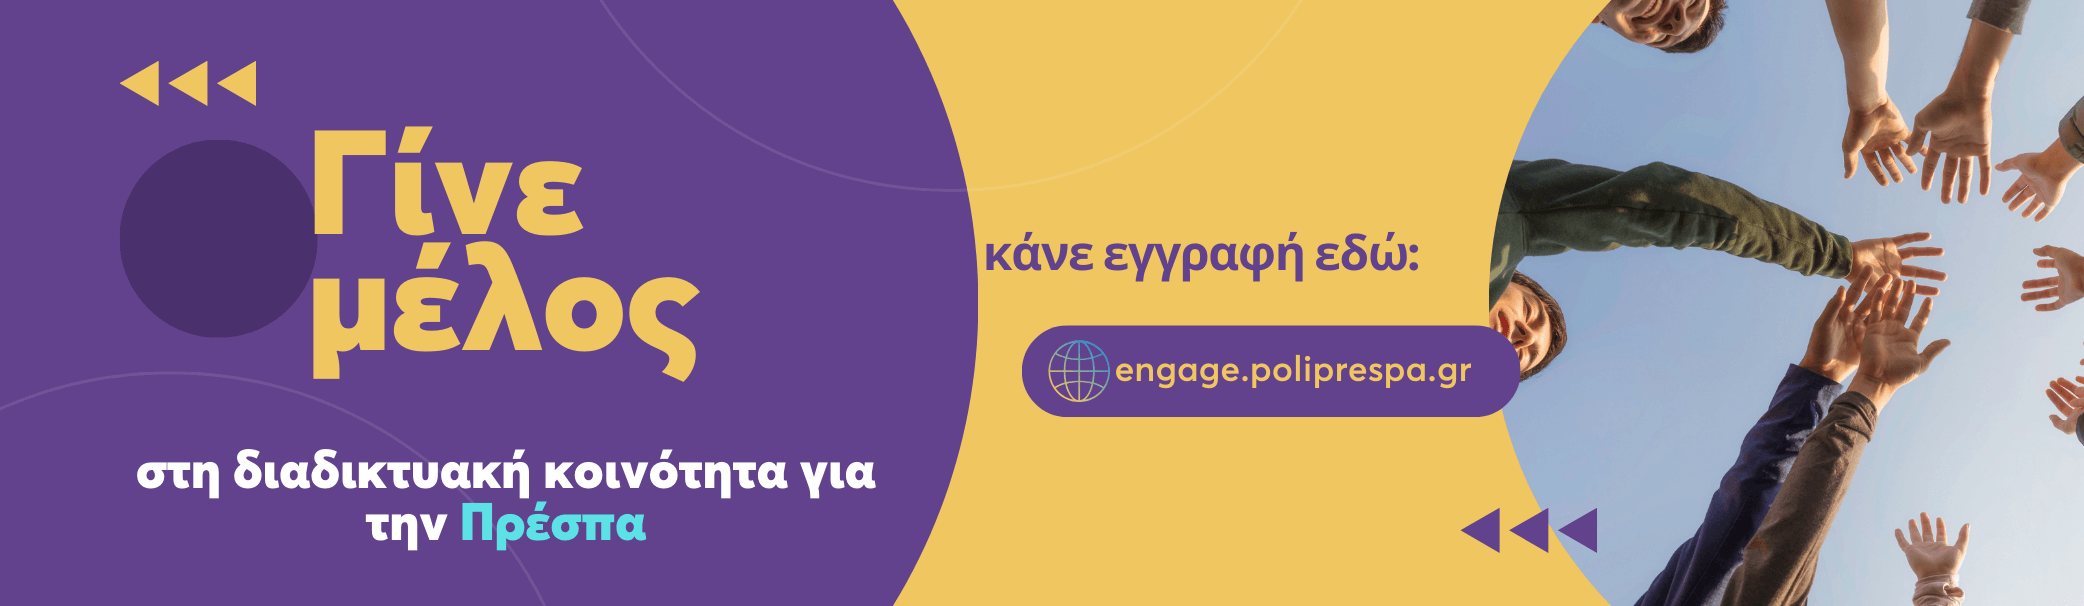 engage.poliprespa.gr